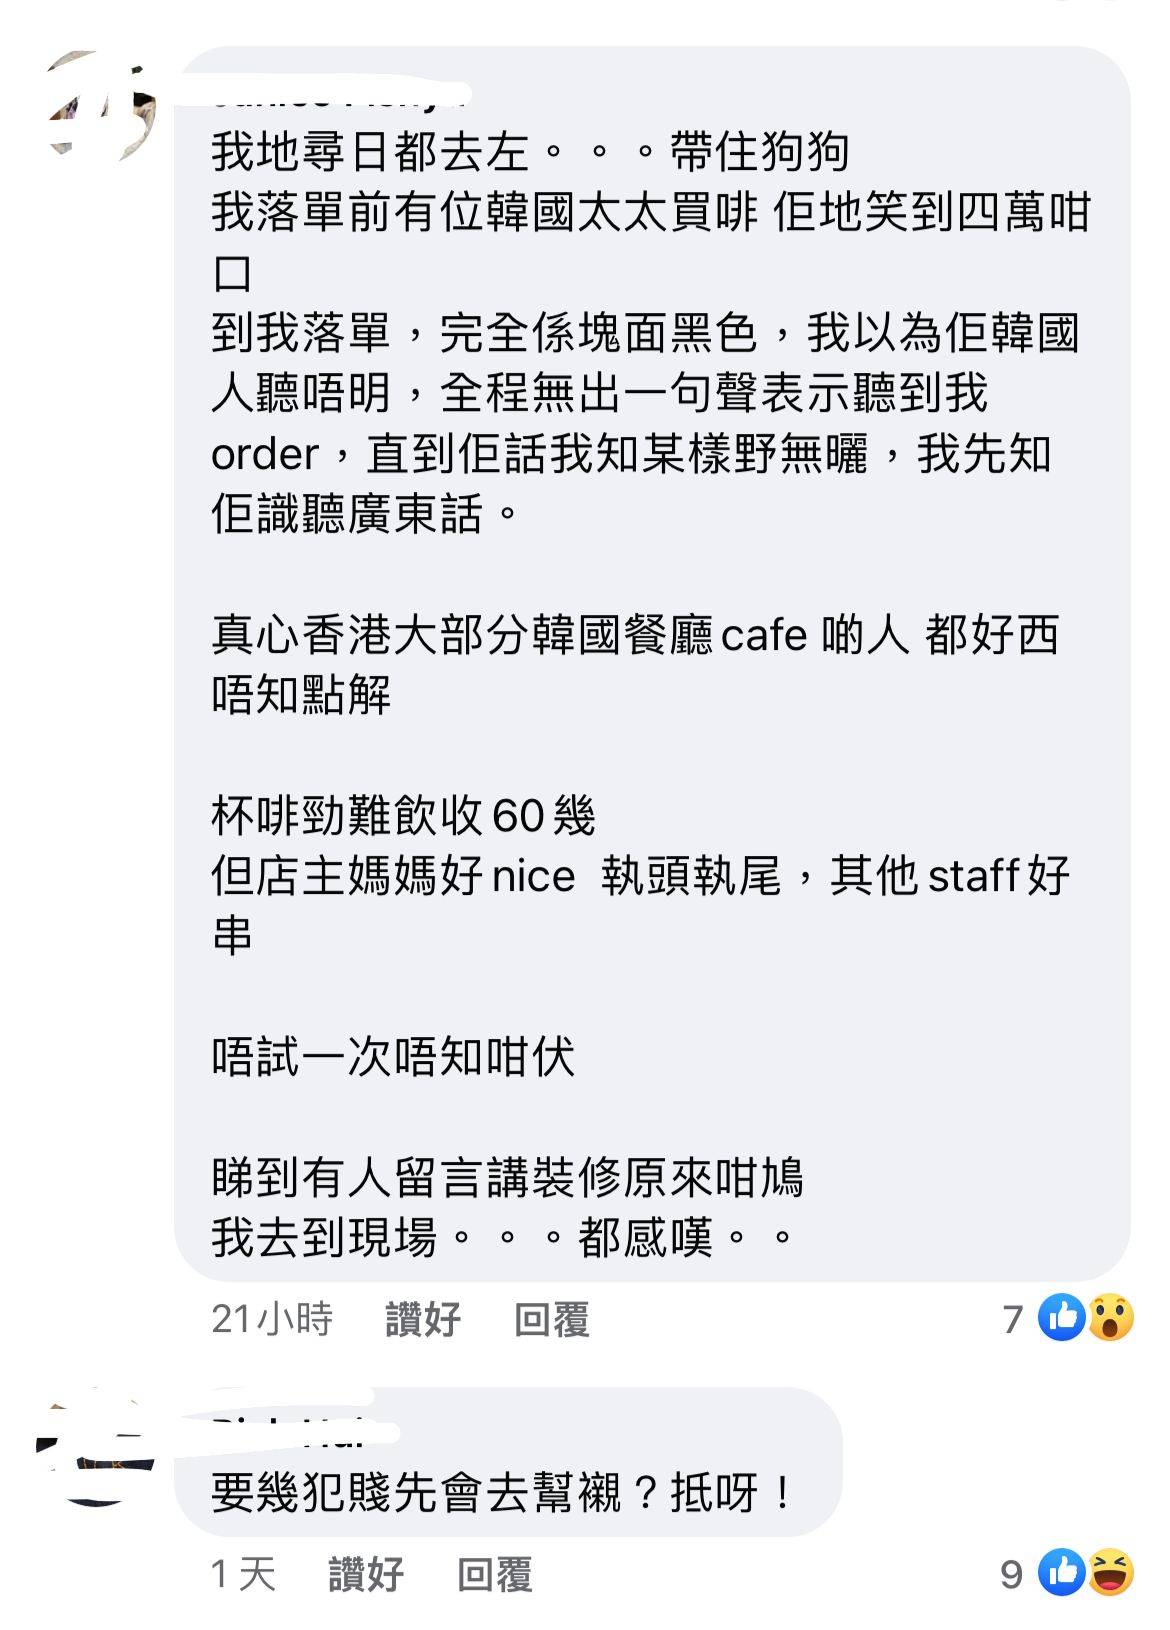  tamora cafe 其他網民都認同店員態度差。